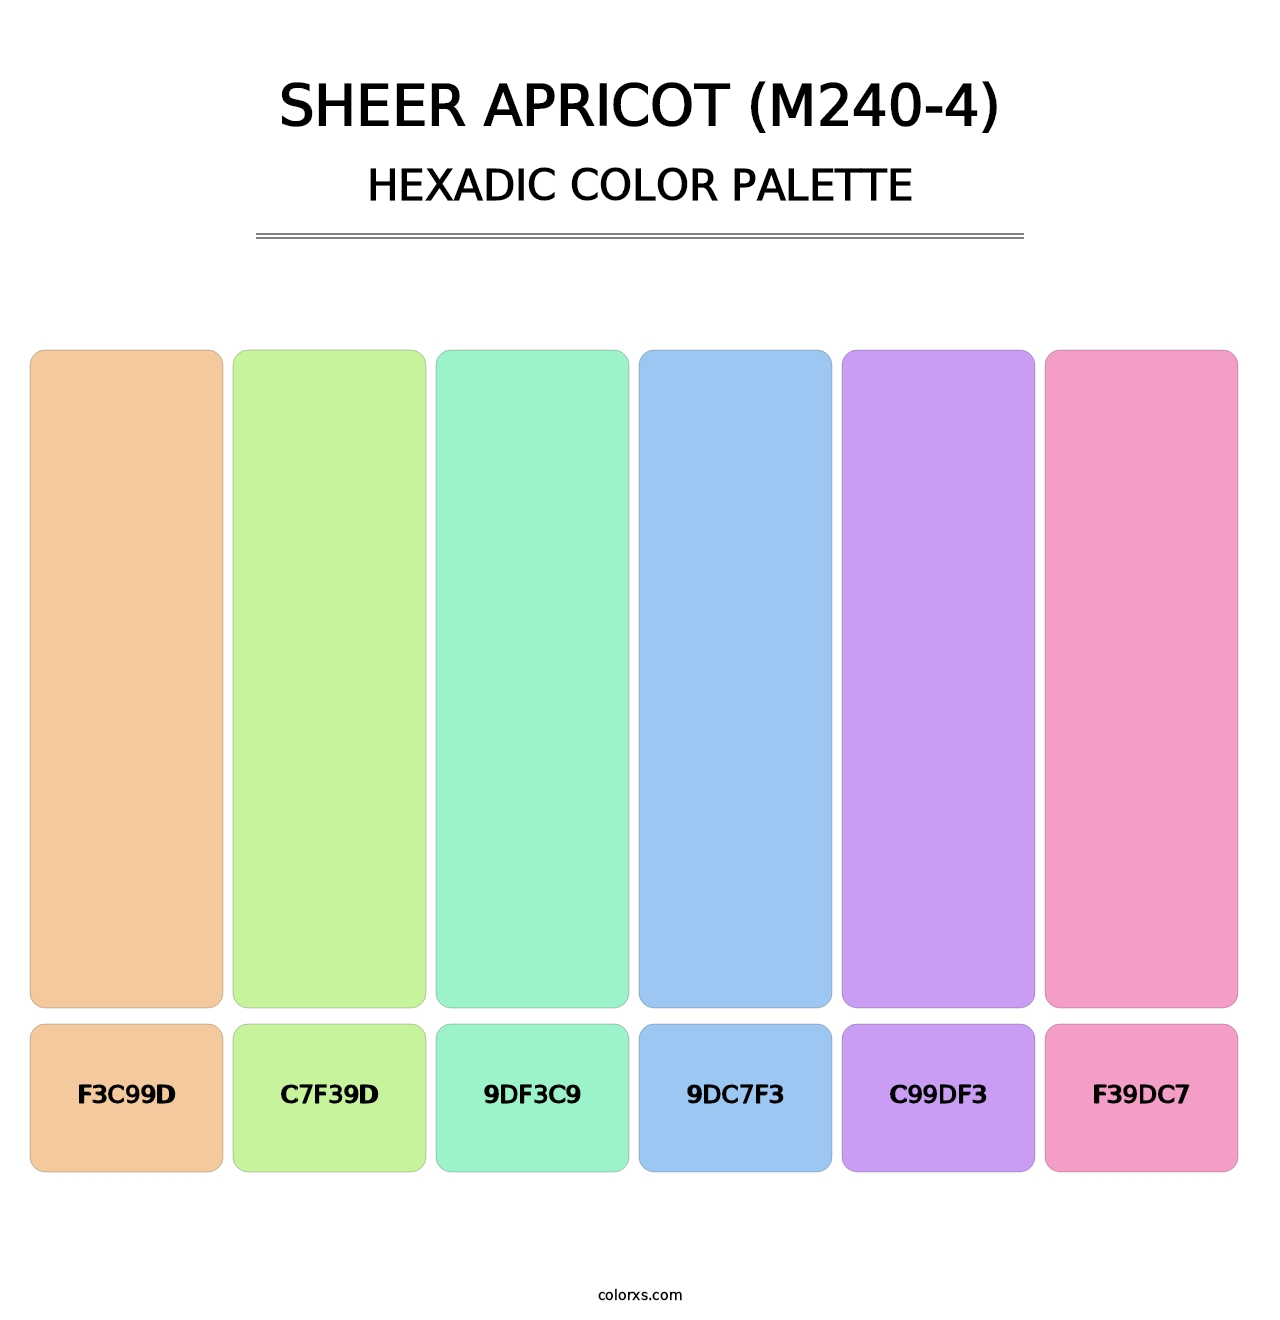 Sheer Apricot (M240-4) - Hexadic Color Palette